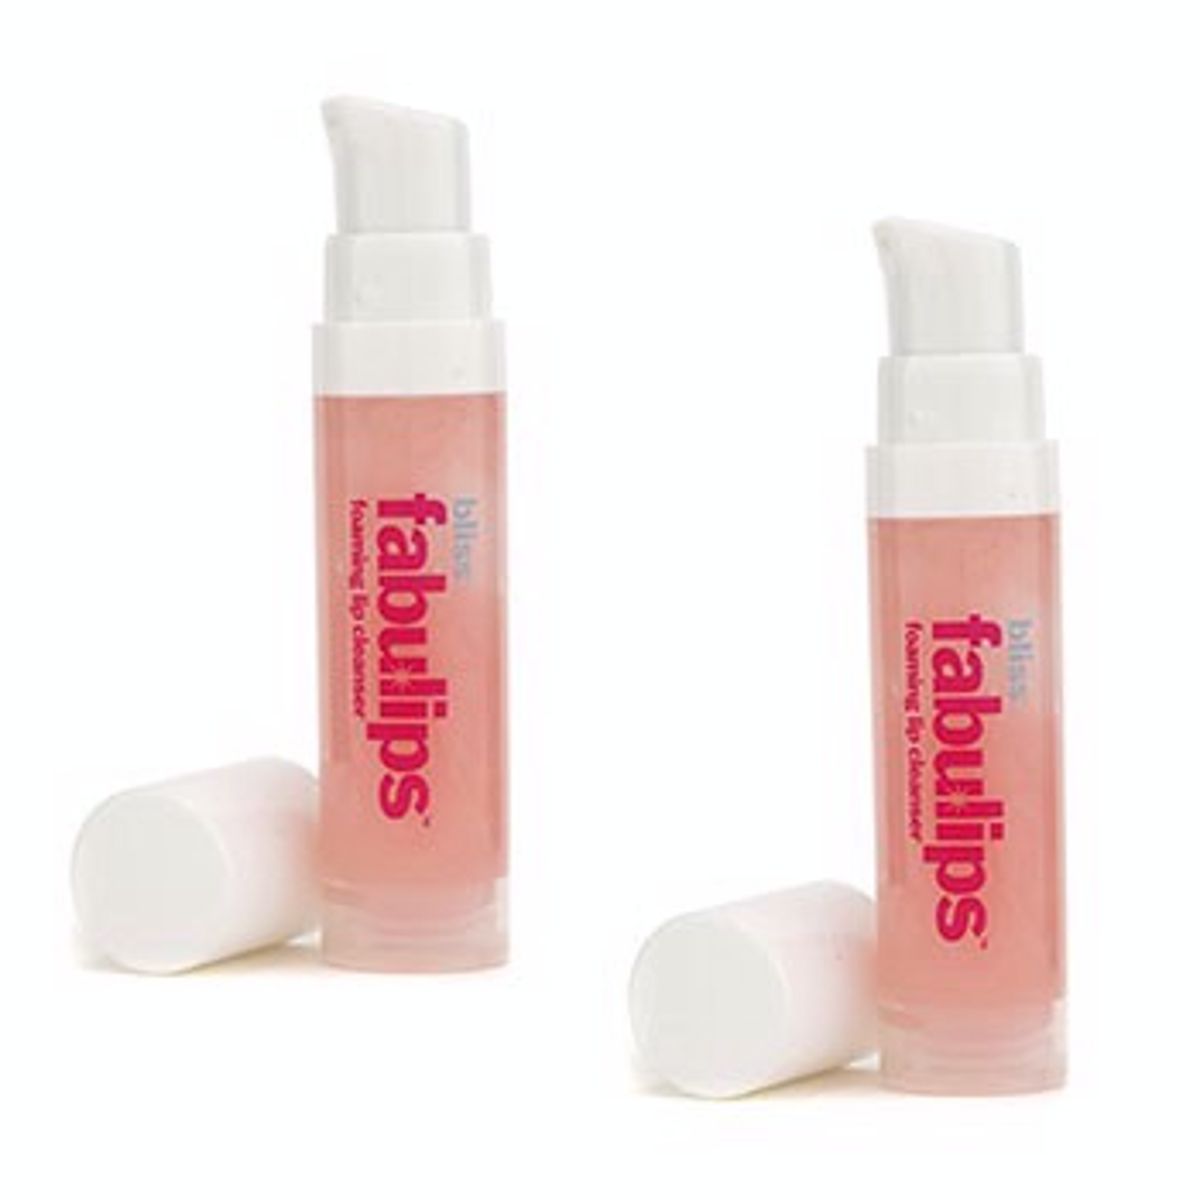 Fabulips Foaming Lip Cleanser Duo Pack Bliss Image